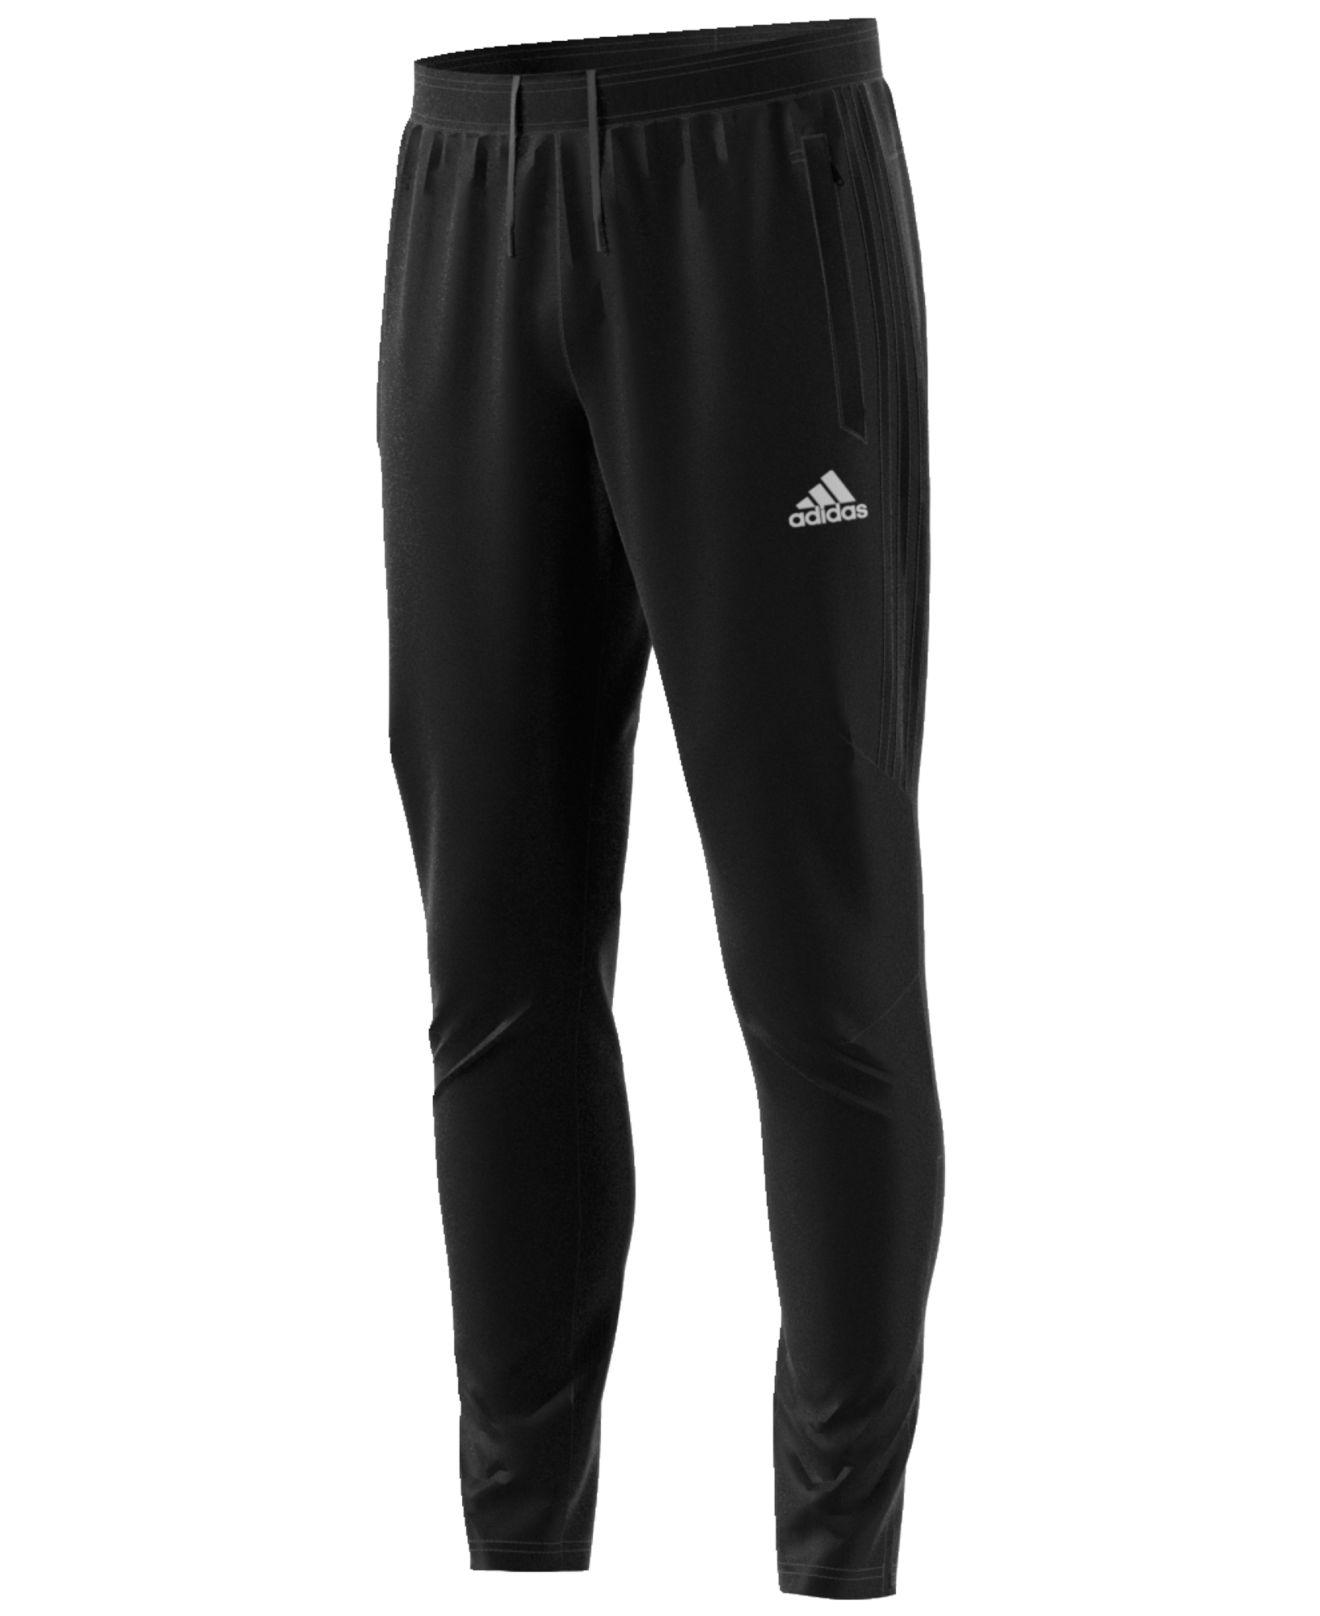 NEW Adidas Boys' Athletic Tiro 19 3/4 Slim Fit ClimaCool Soccer Pants  Shorts | eBay